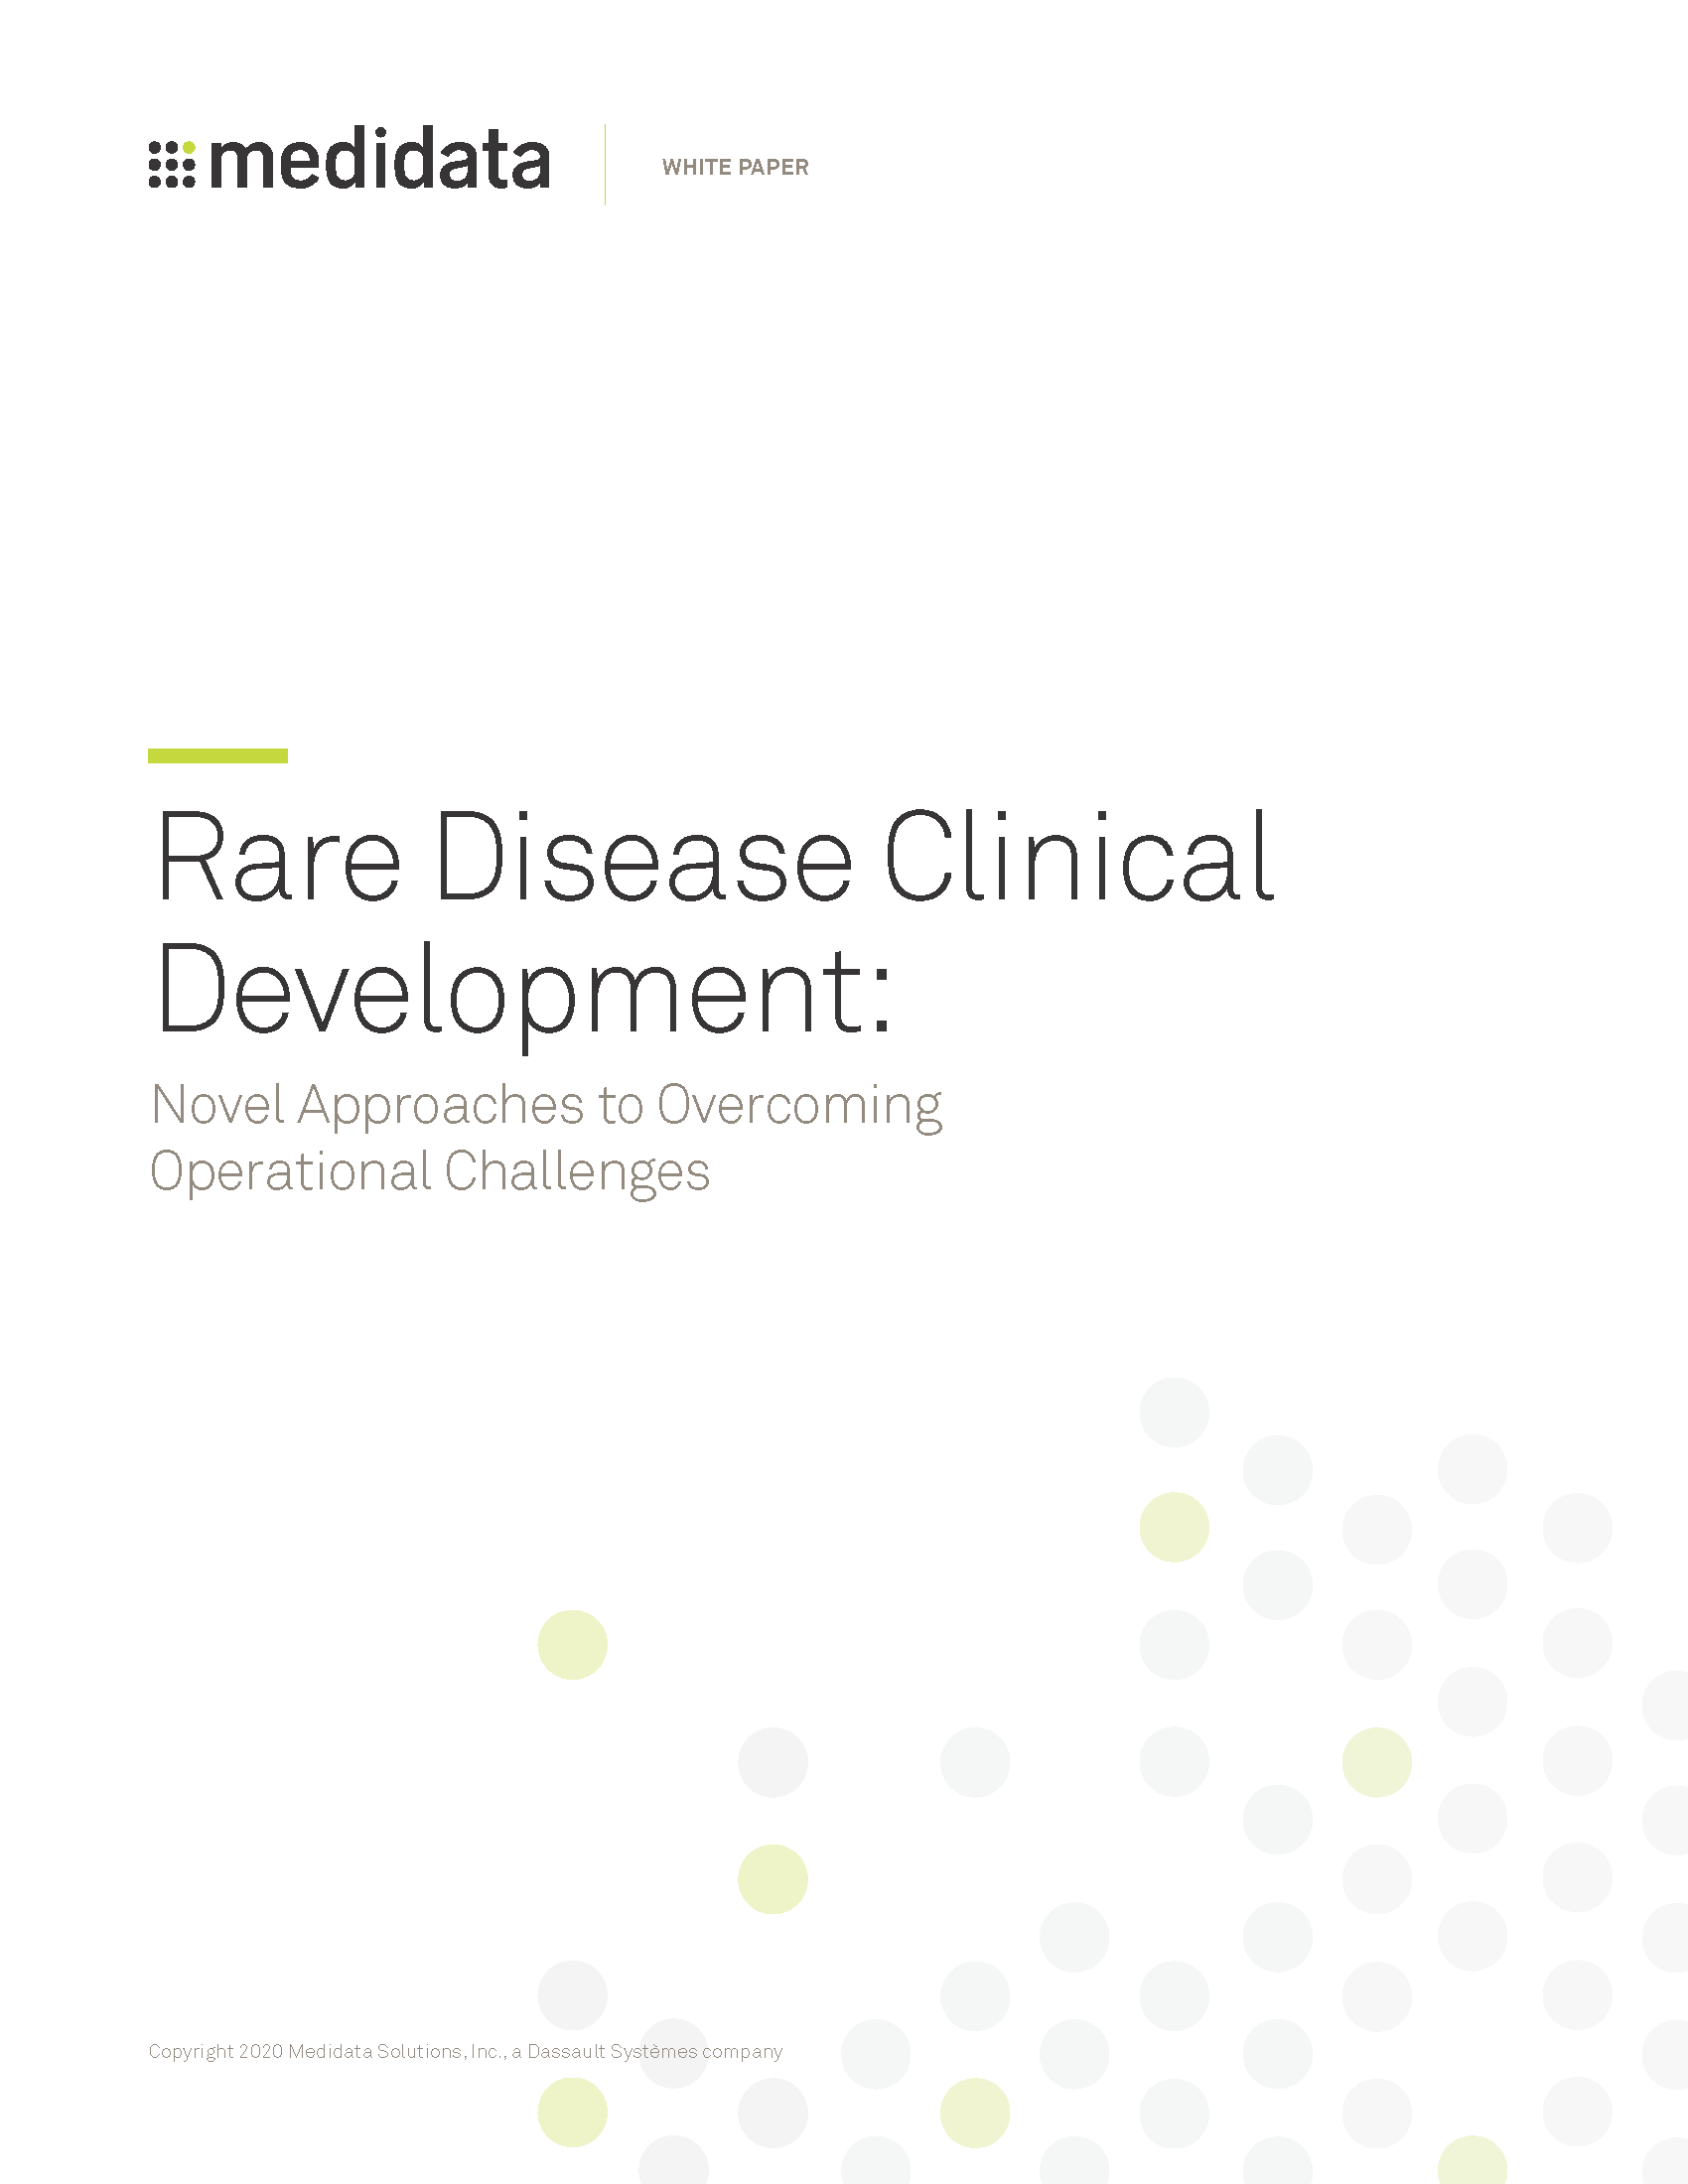 Rare Disease Clinical Development